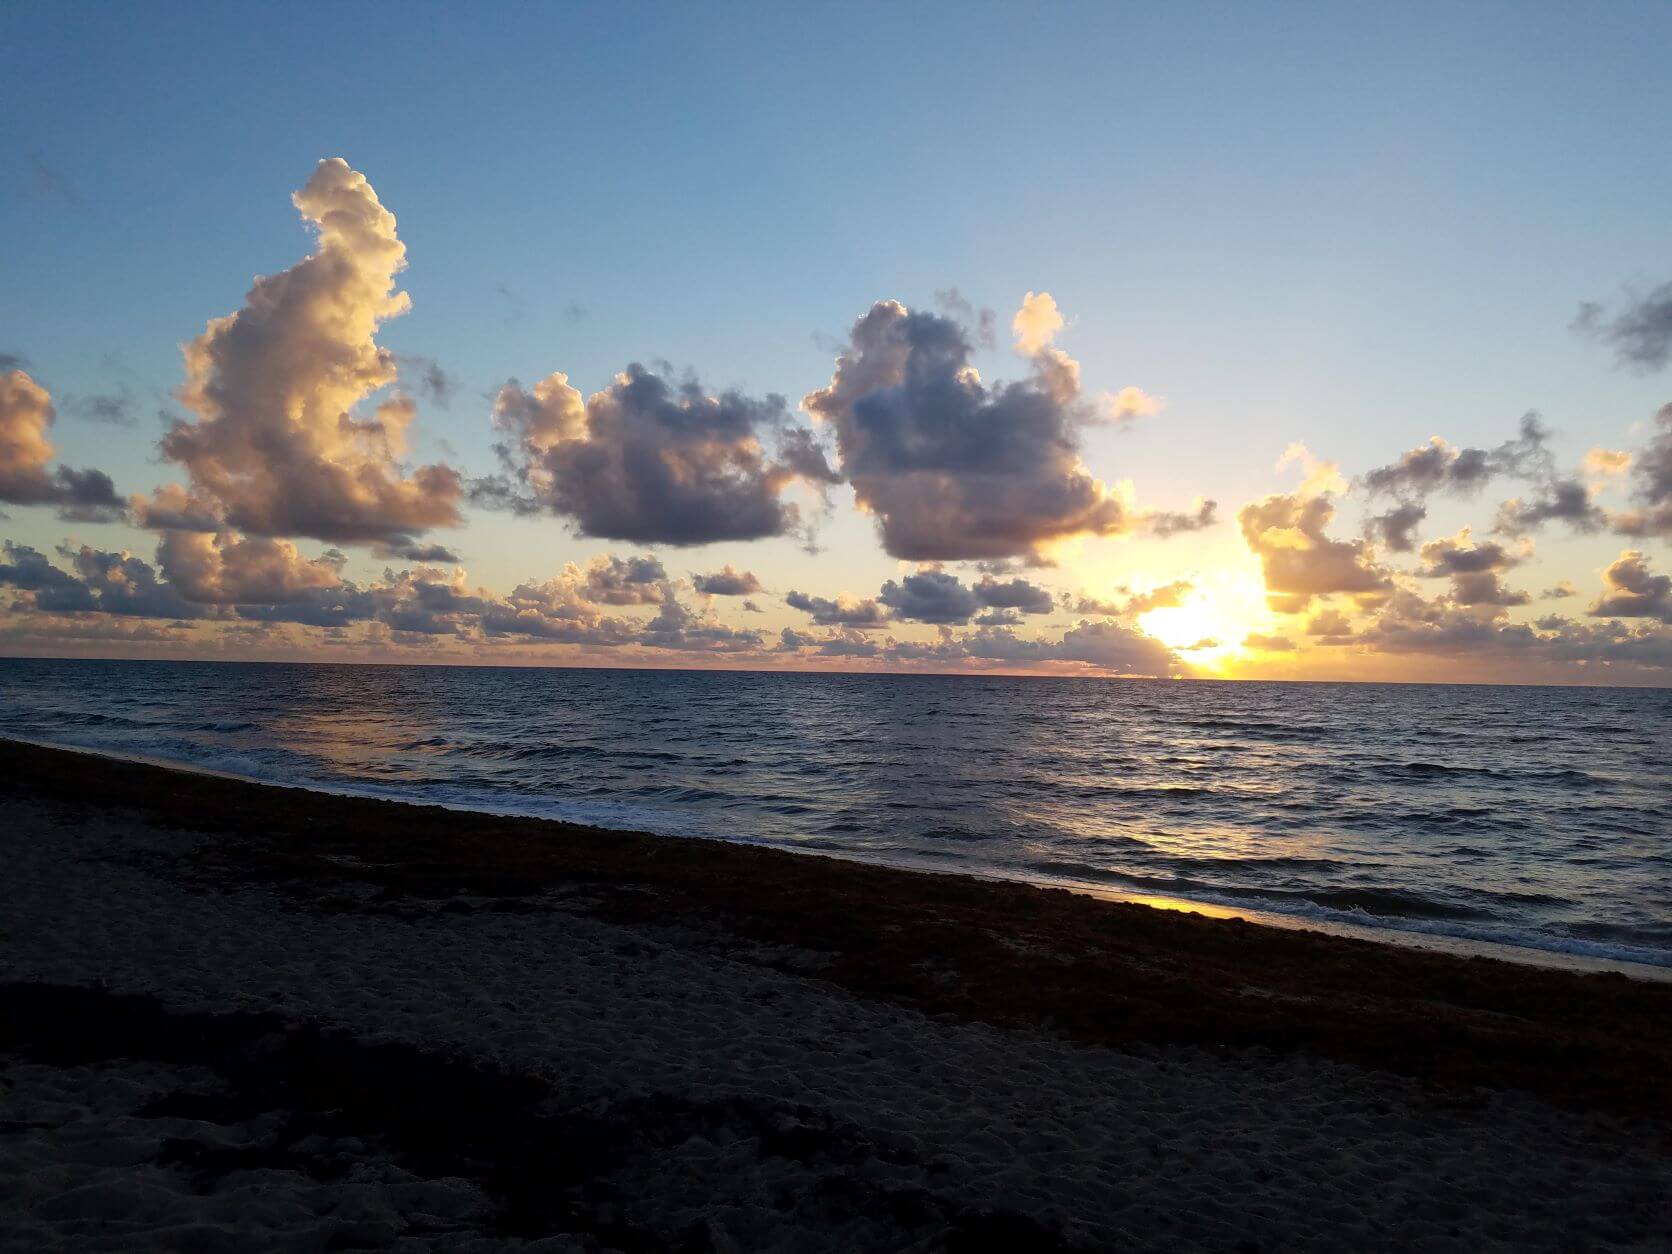 alt text = "delray beach florida sunrise on the atlantic shoreline"